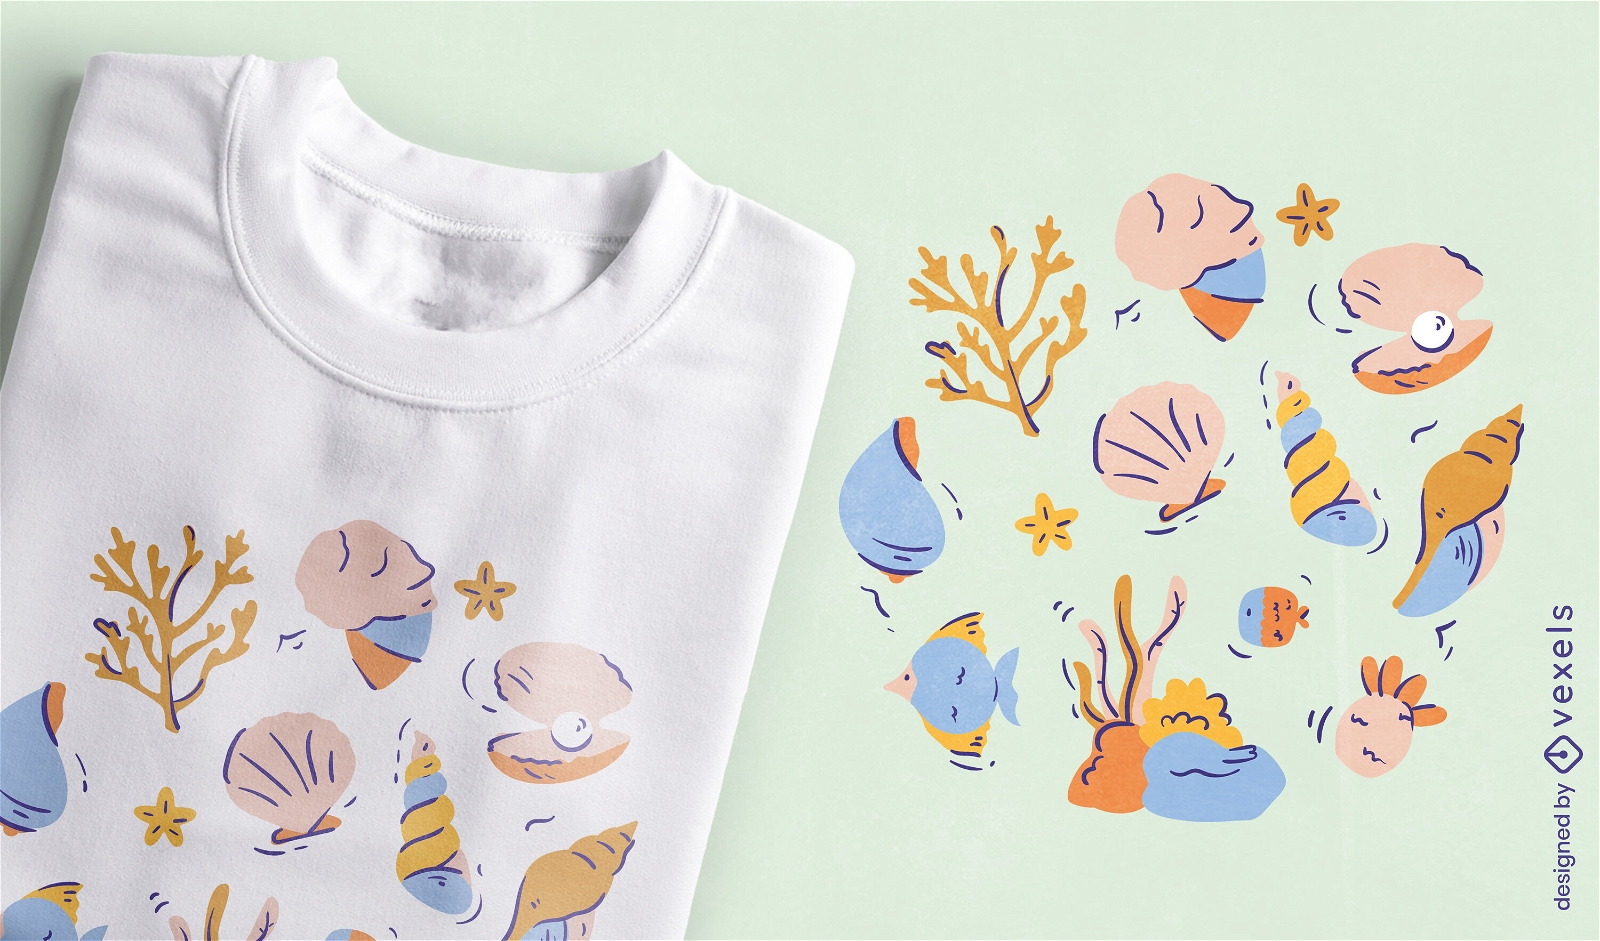 Underwater sea life elements t-shirt design